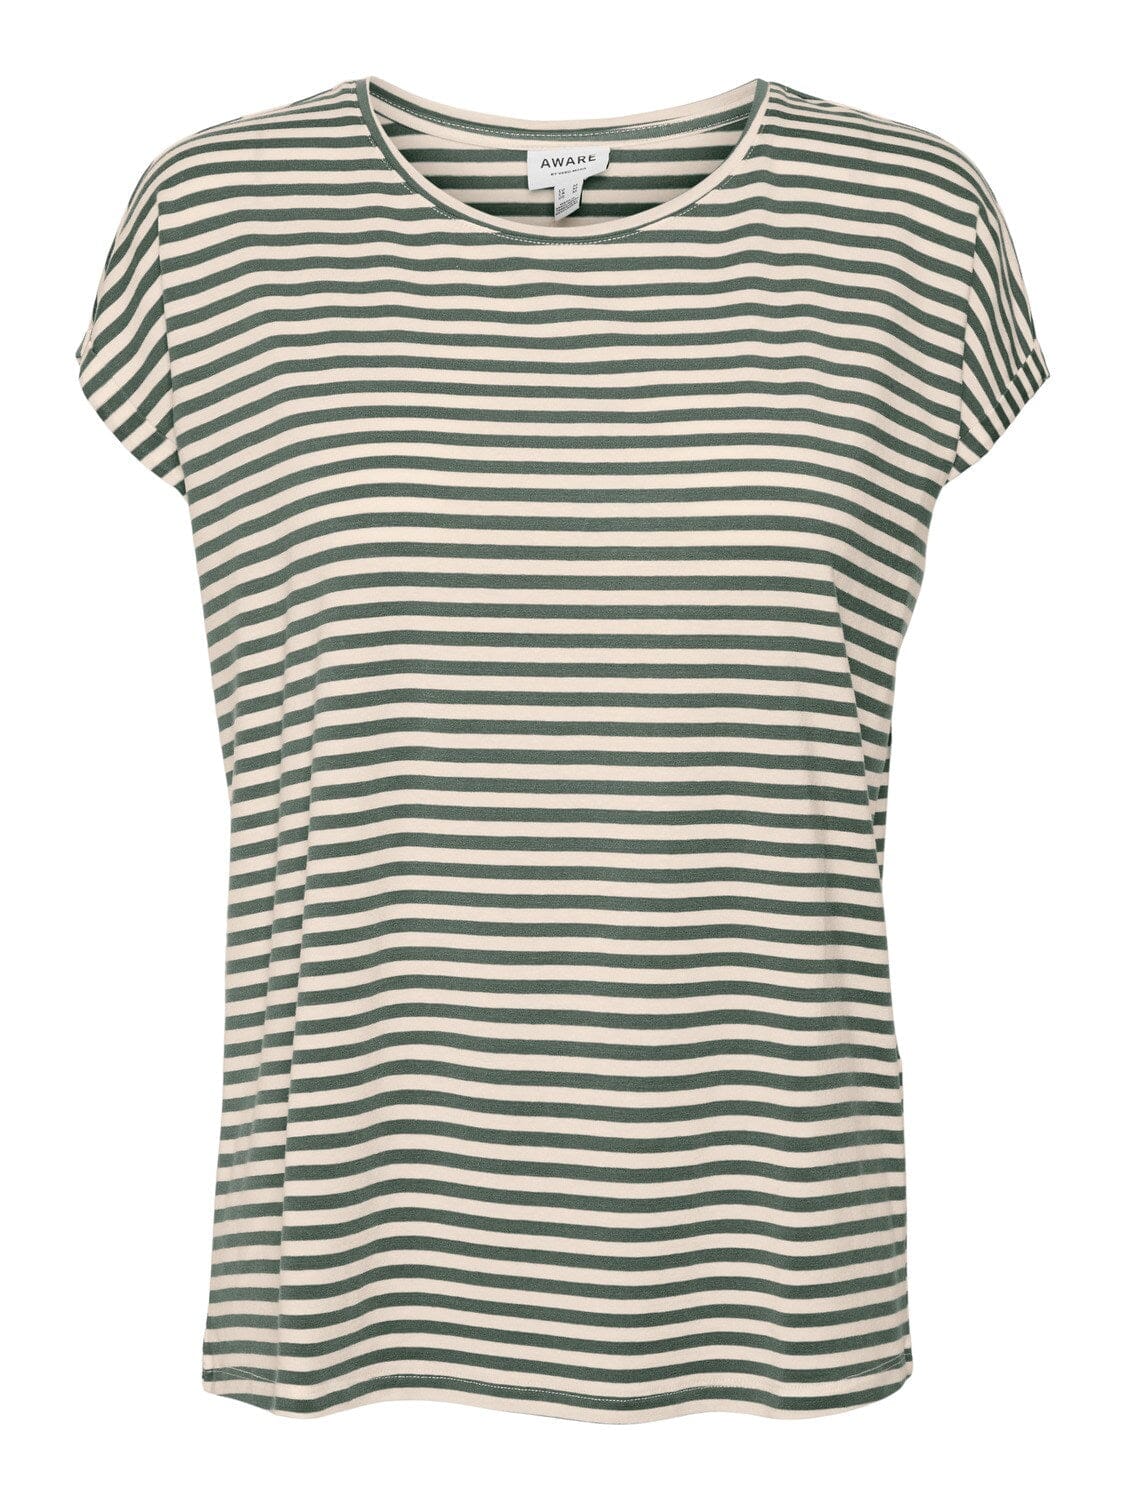 Mava | Stripe Top | Laurel Wreath Shirts & Tops Vero Moda 